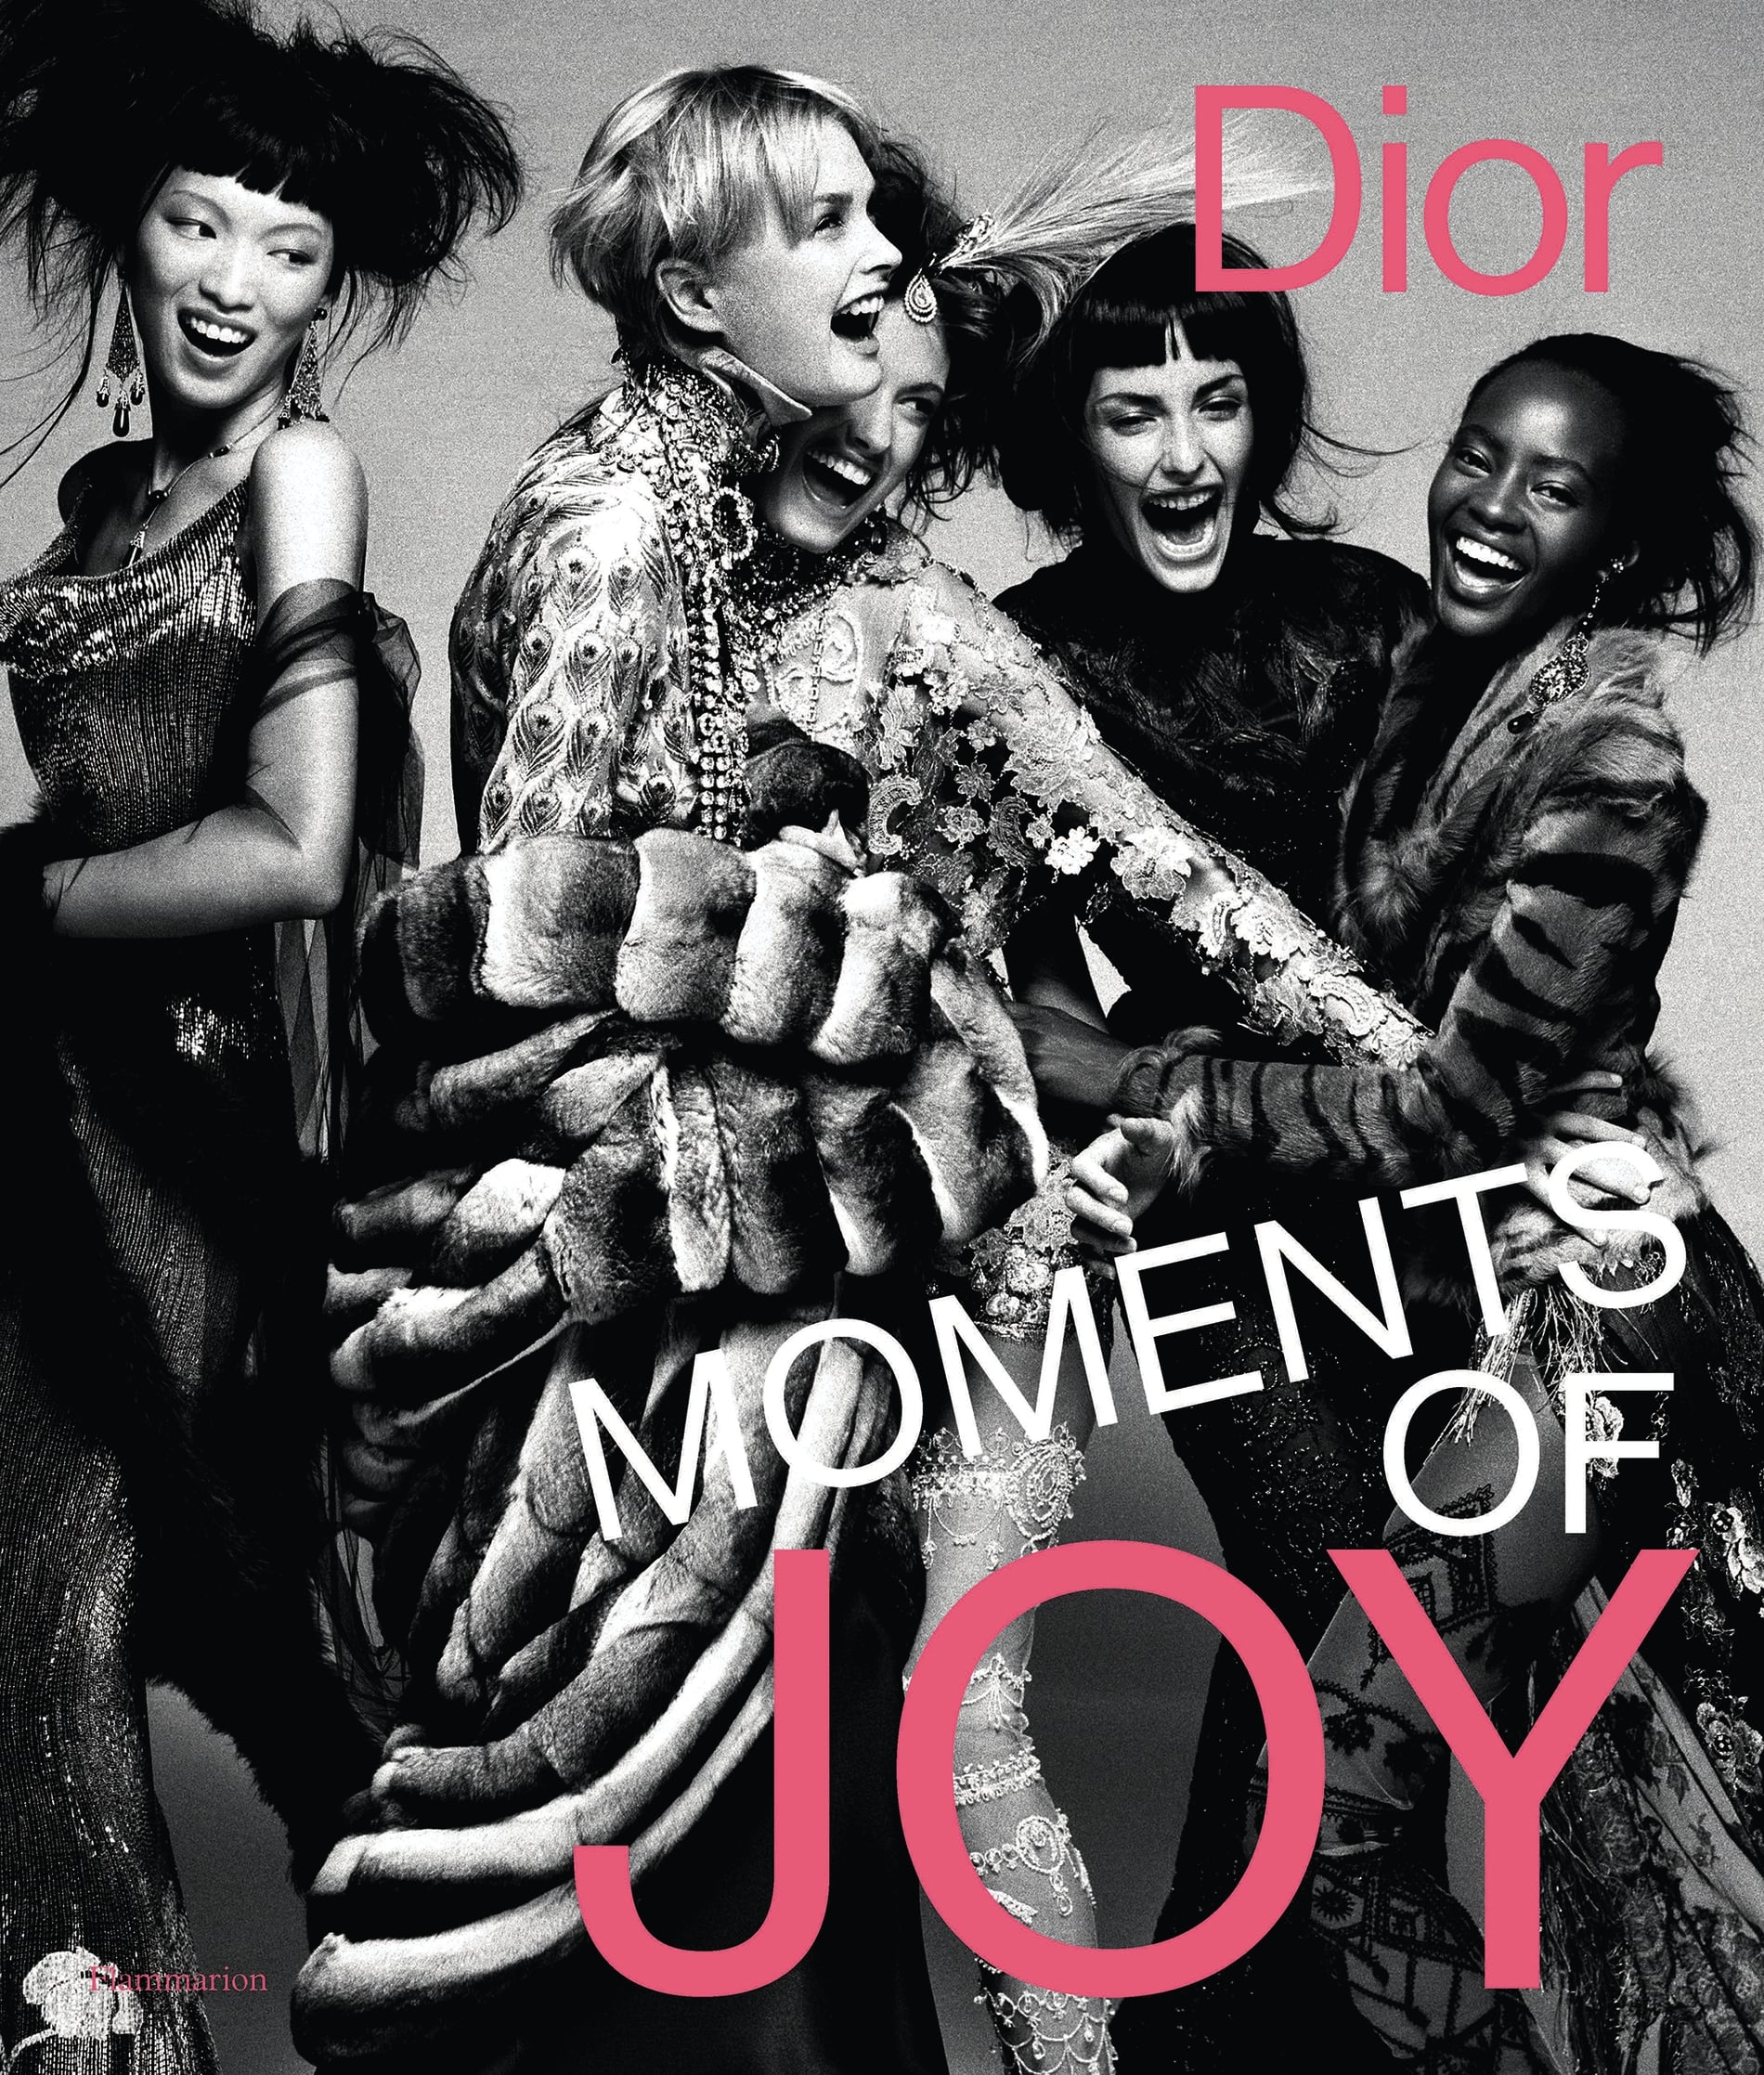 Dior_MomentsofJoy_cover.jpg